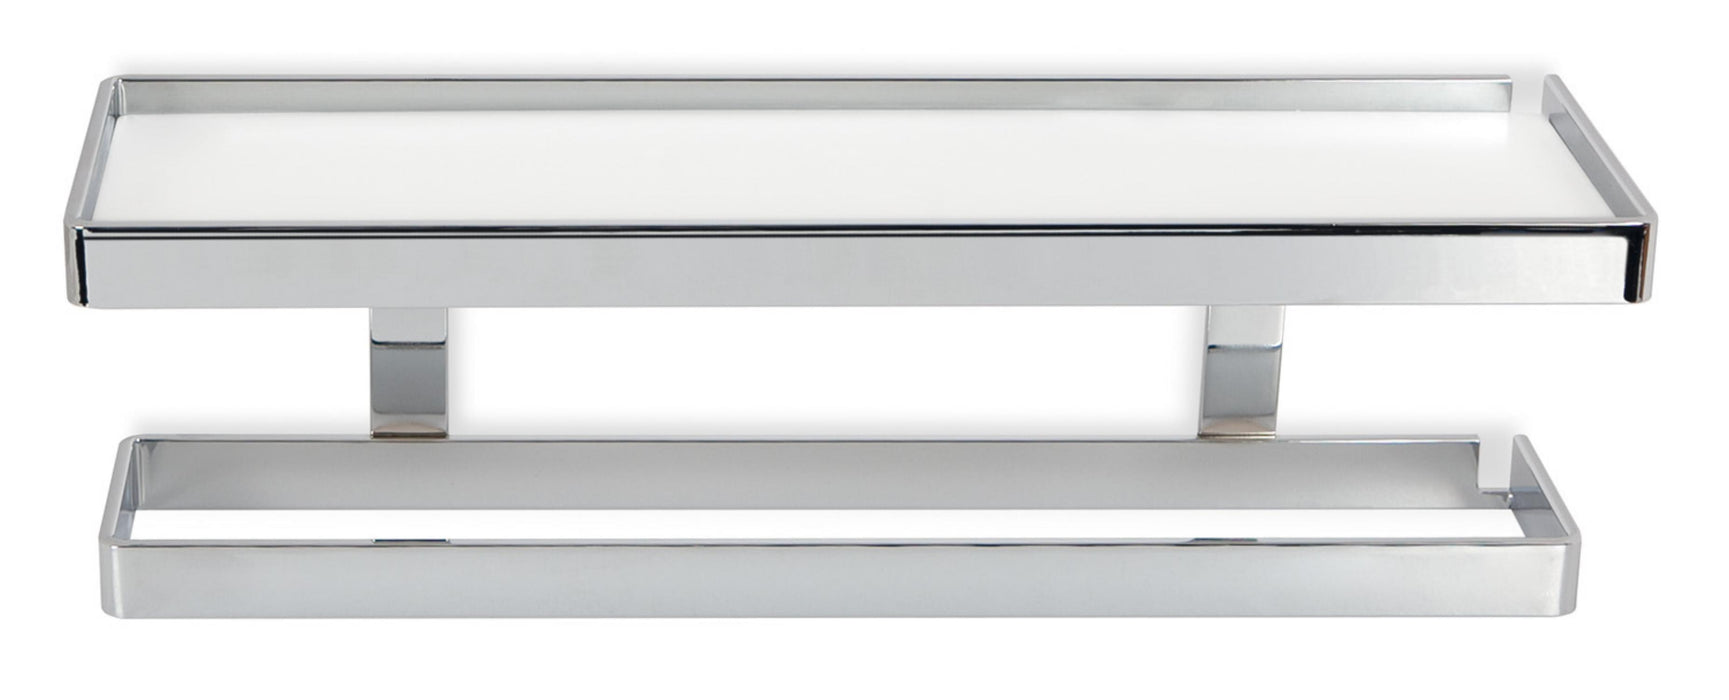 BELTRAN 11511 TURIN Shelf With Towel Bar Chrome/White